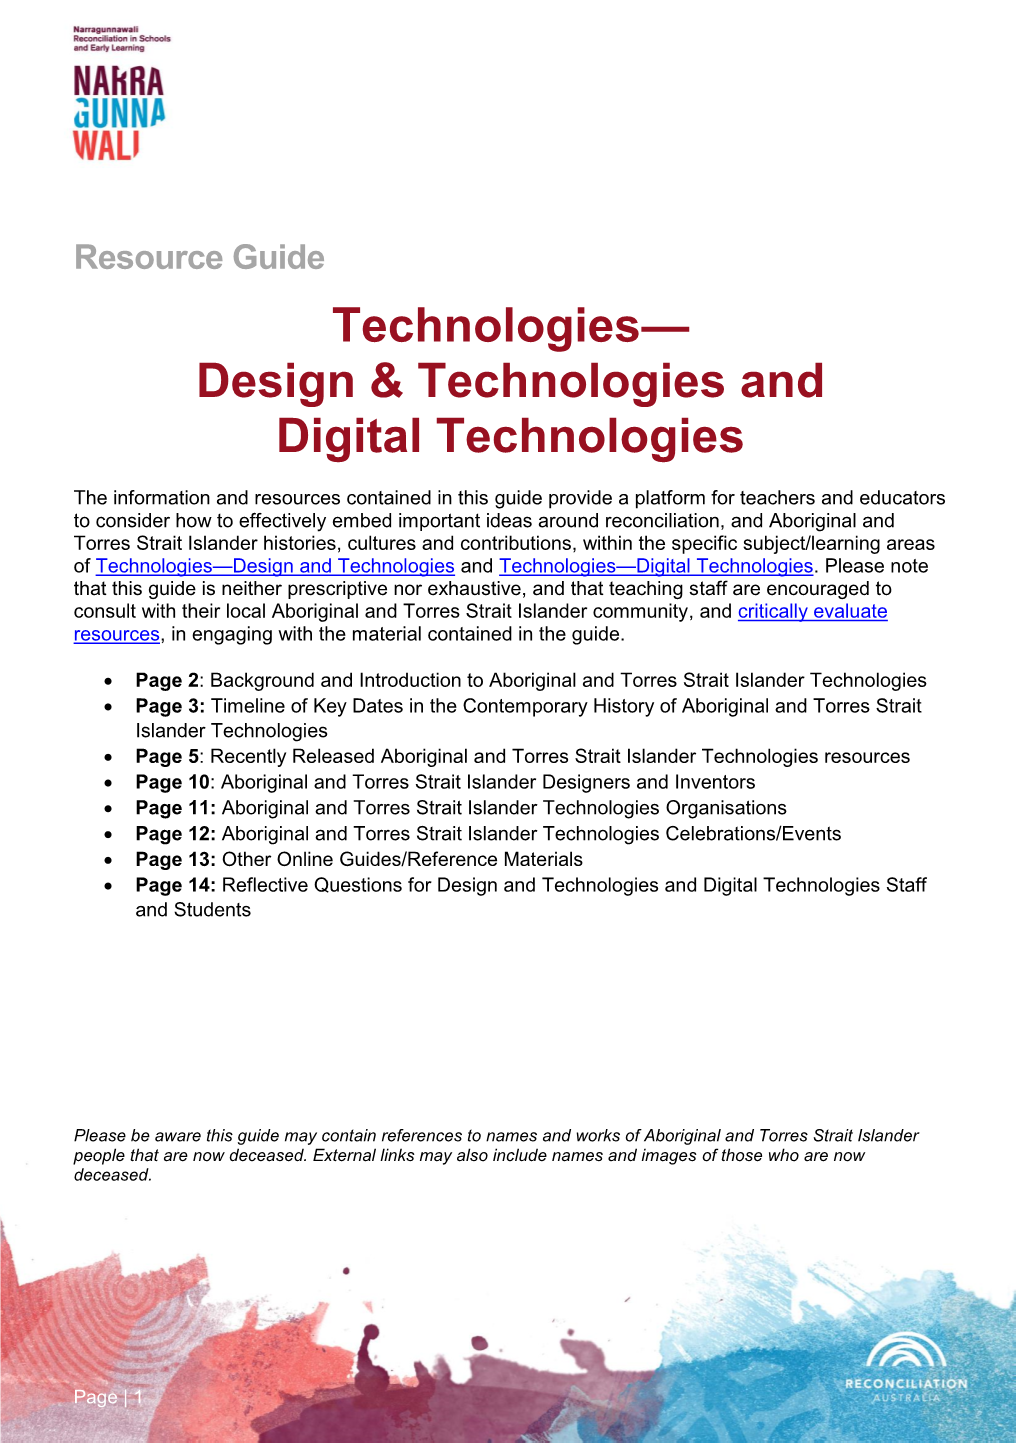 Design & Technologies and Digital Technologies